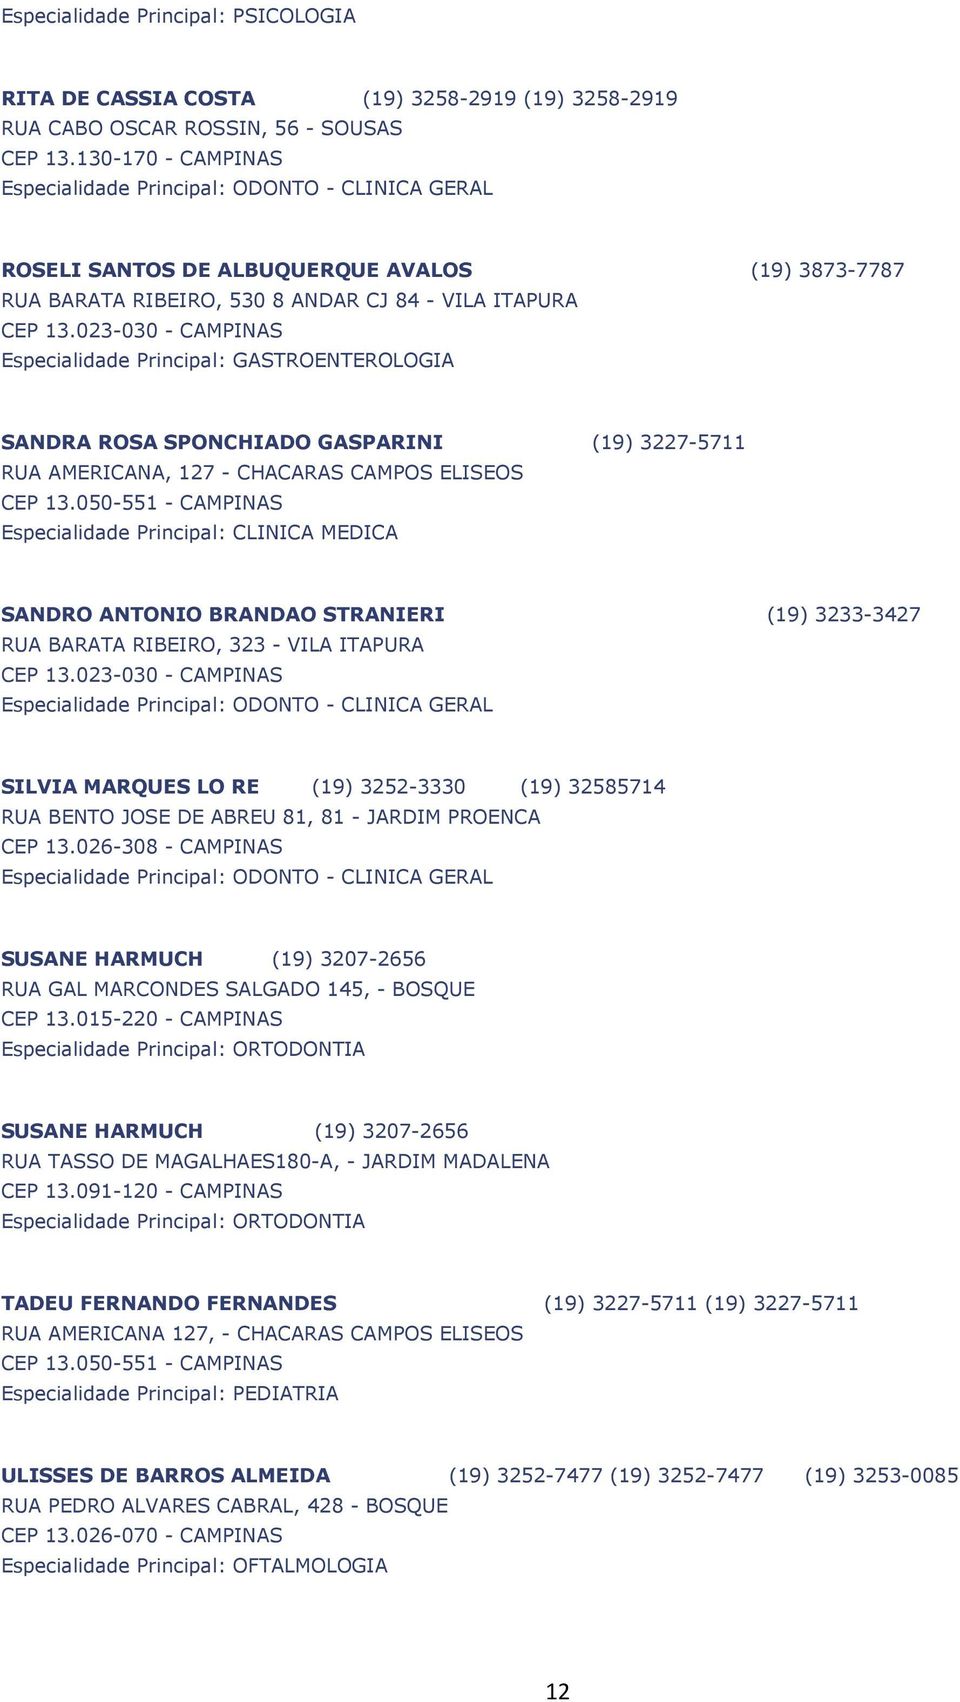 023-030 - CAMPINAS Especialidade Principal: GASTROENTEROLOGIA SANDRA ROSA SPONCHIADO GASPARINI (19) 3227-5711 RUA AMERICANA, 127 - CHACARAS CAMPOS ELISEOS CEP 13.